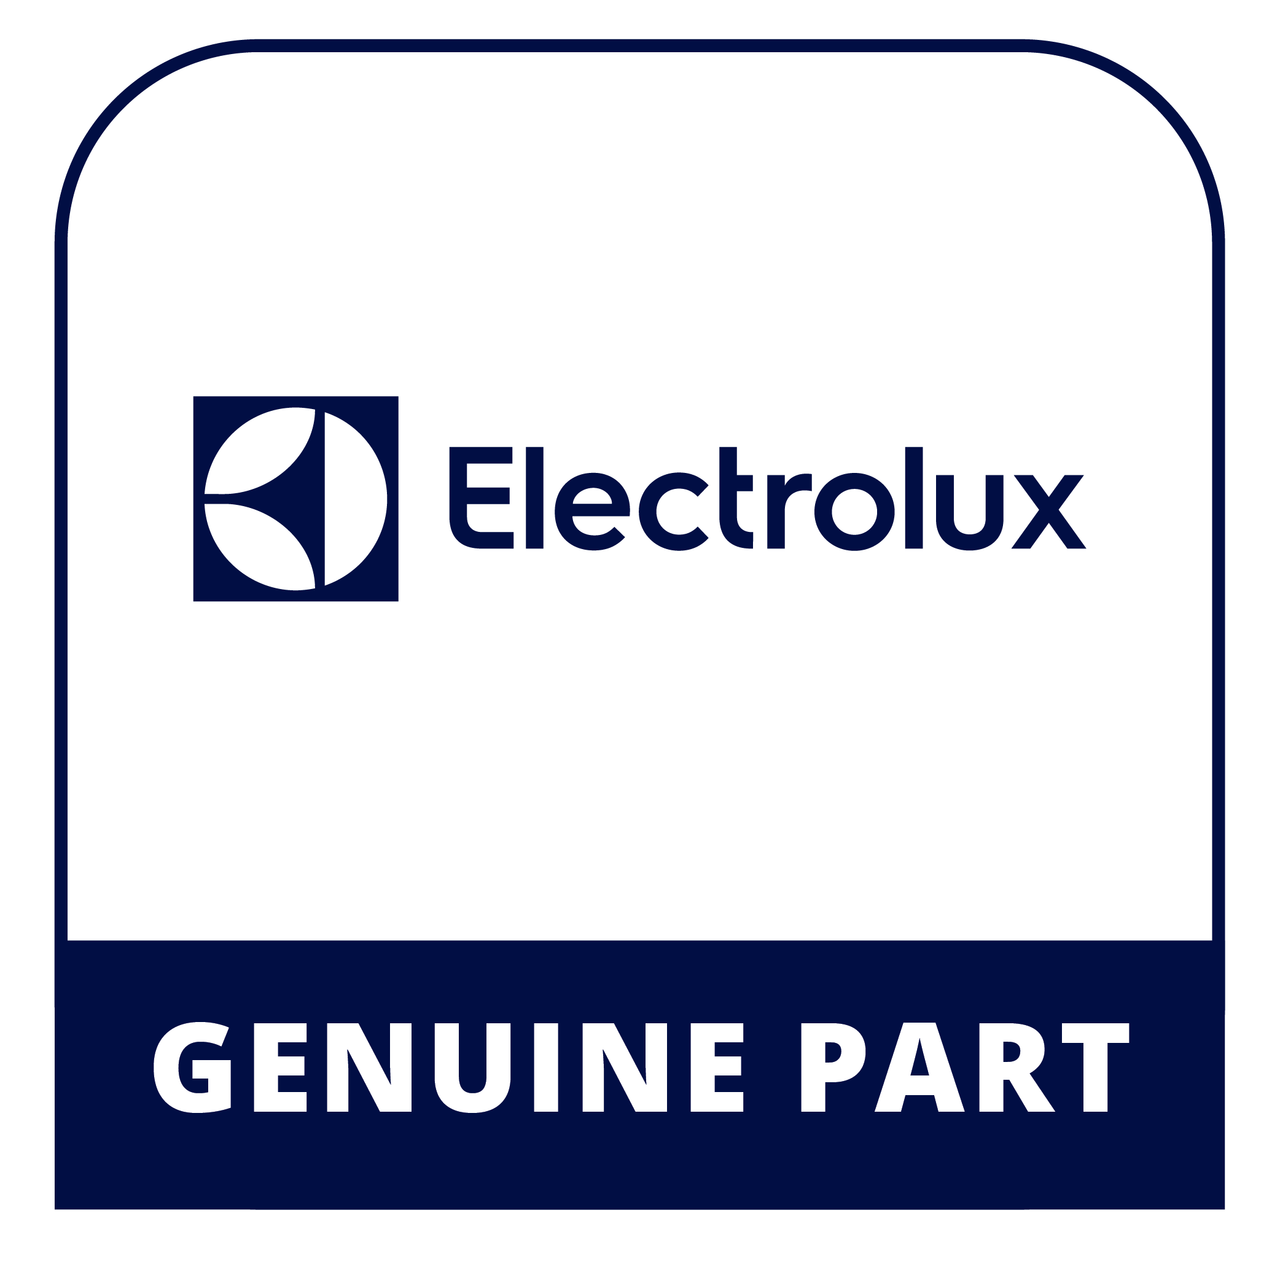 Frigidaire - Electrolux 5304508635 Energy Guide Label - Genuine Electrolux Part